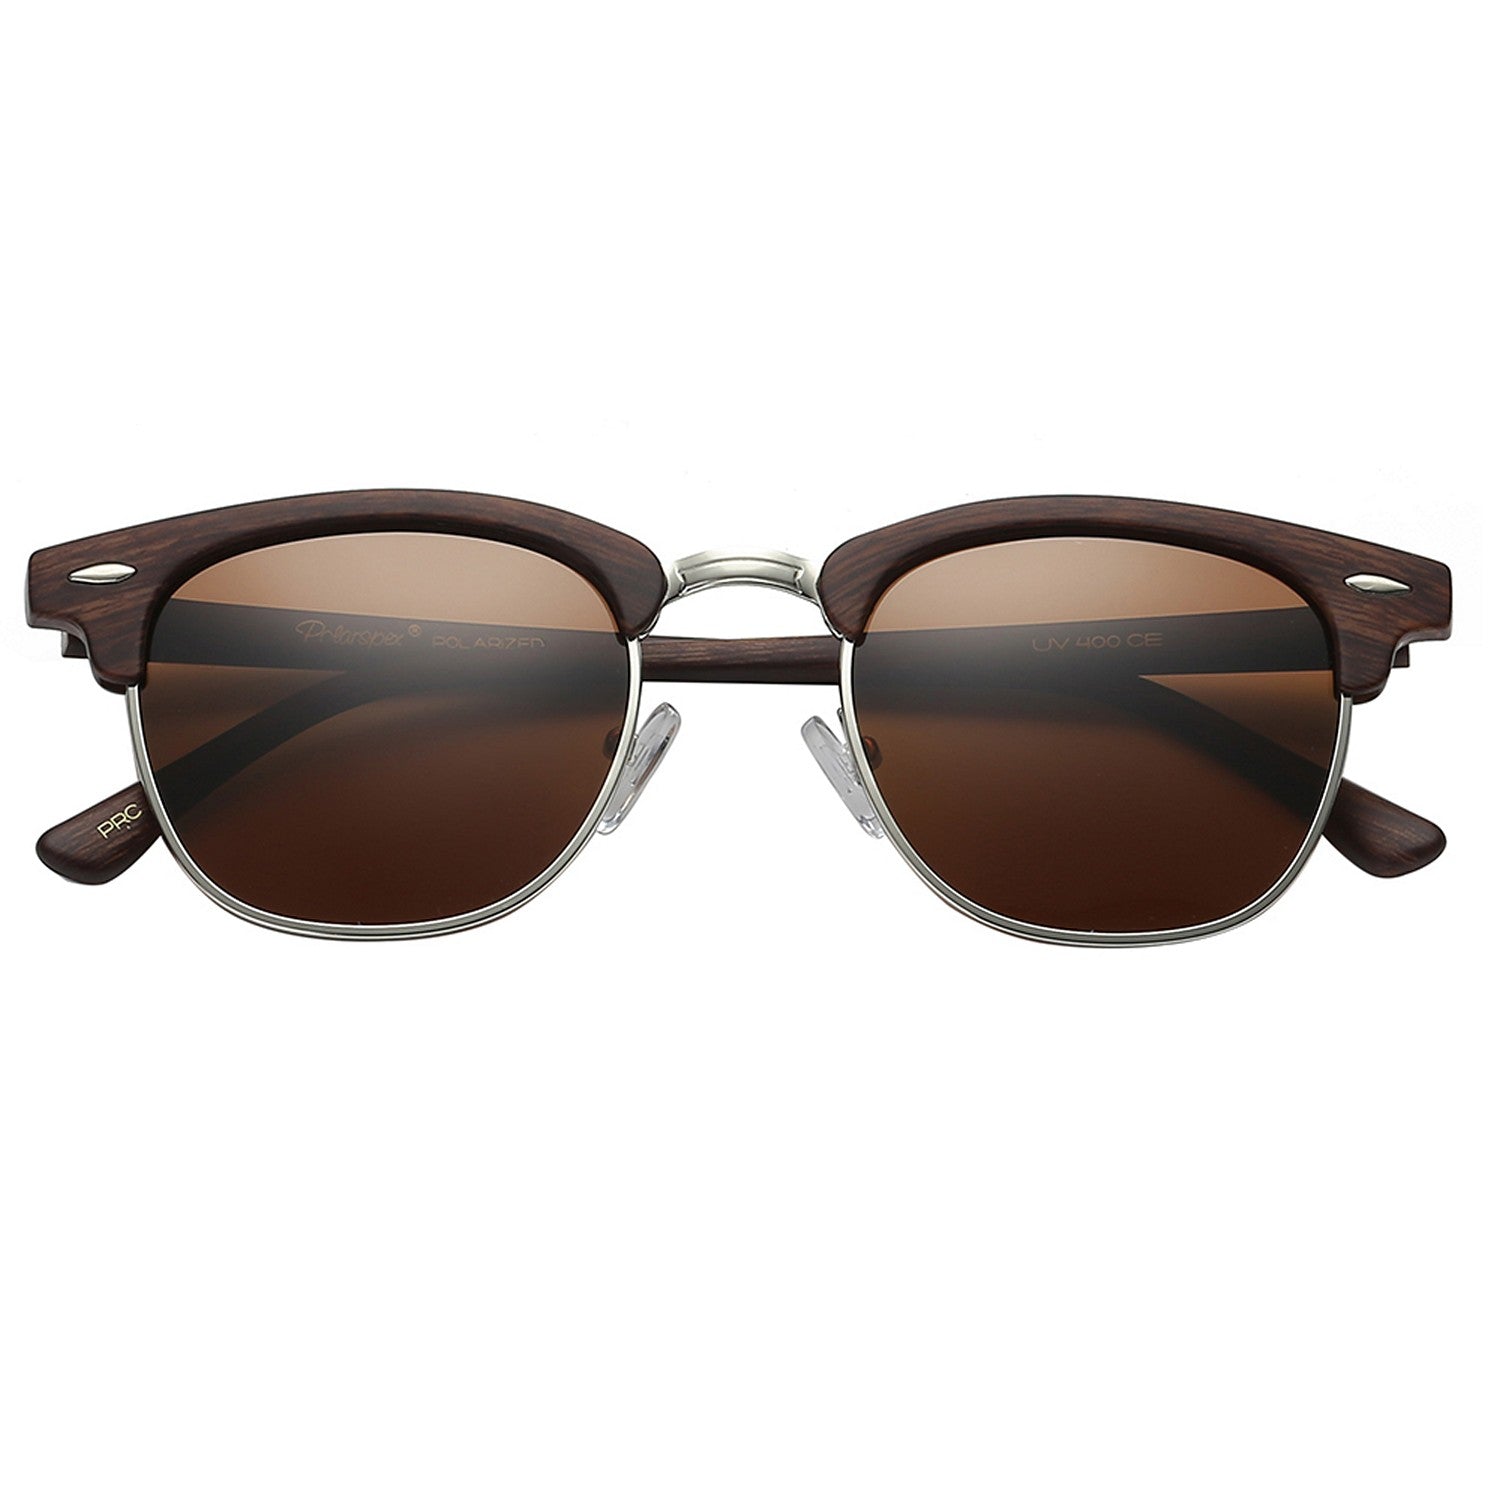 Buy Jubilant Clubmaster Sunglasses for Men and Women Semi-Rimless Frame  Driving Sun glasses 100% UV Blocking (Black/Black/Golden Rim) at Amazon.in